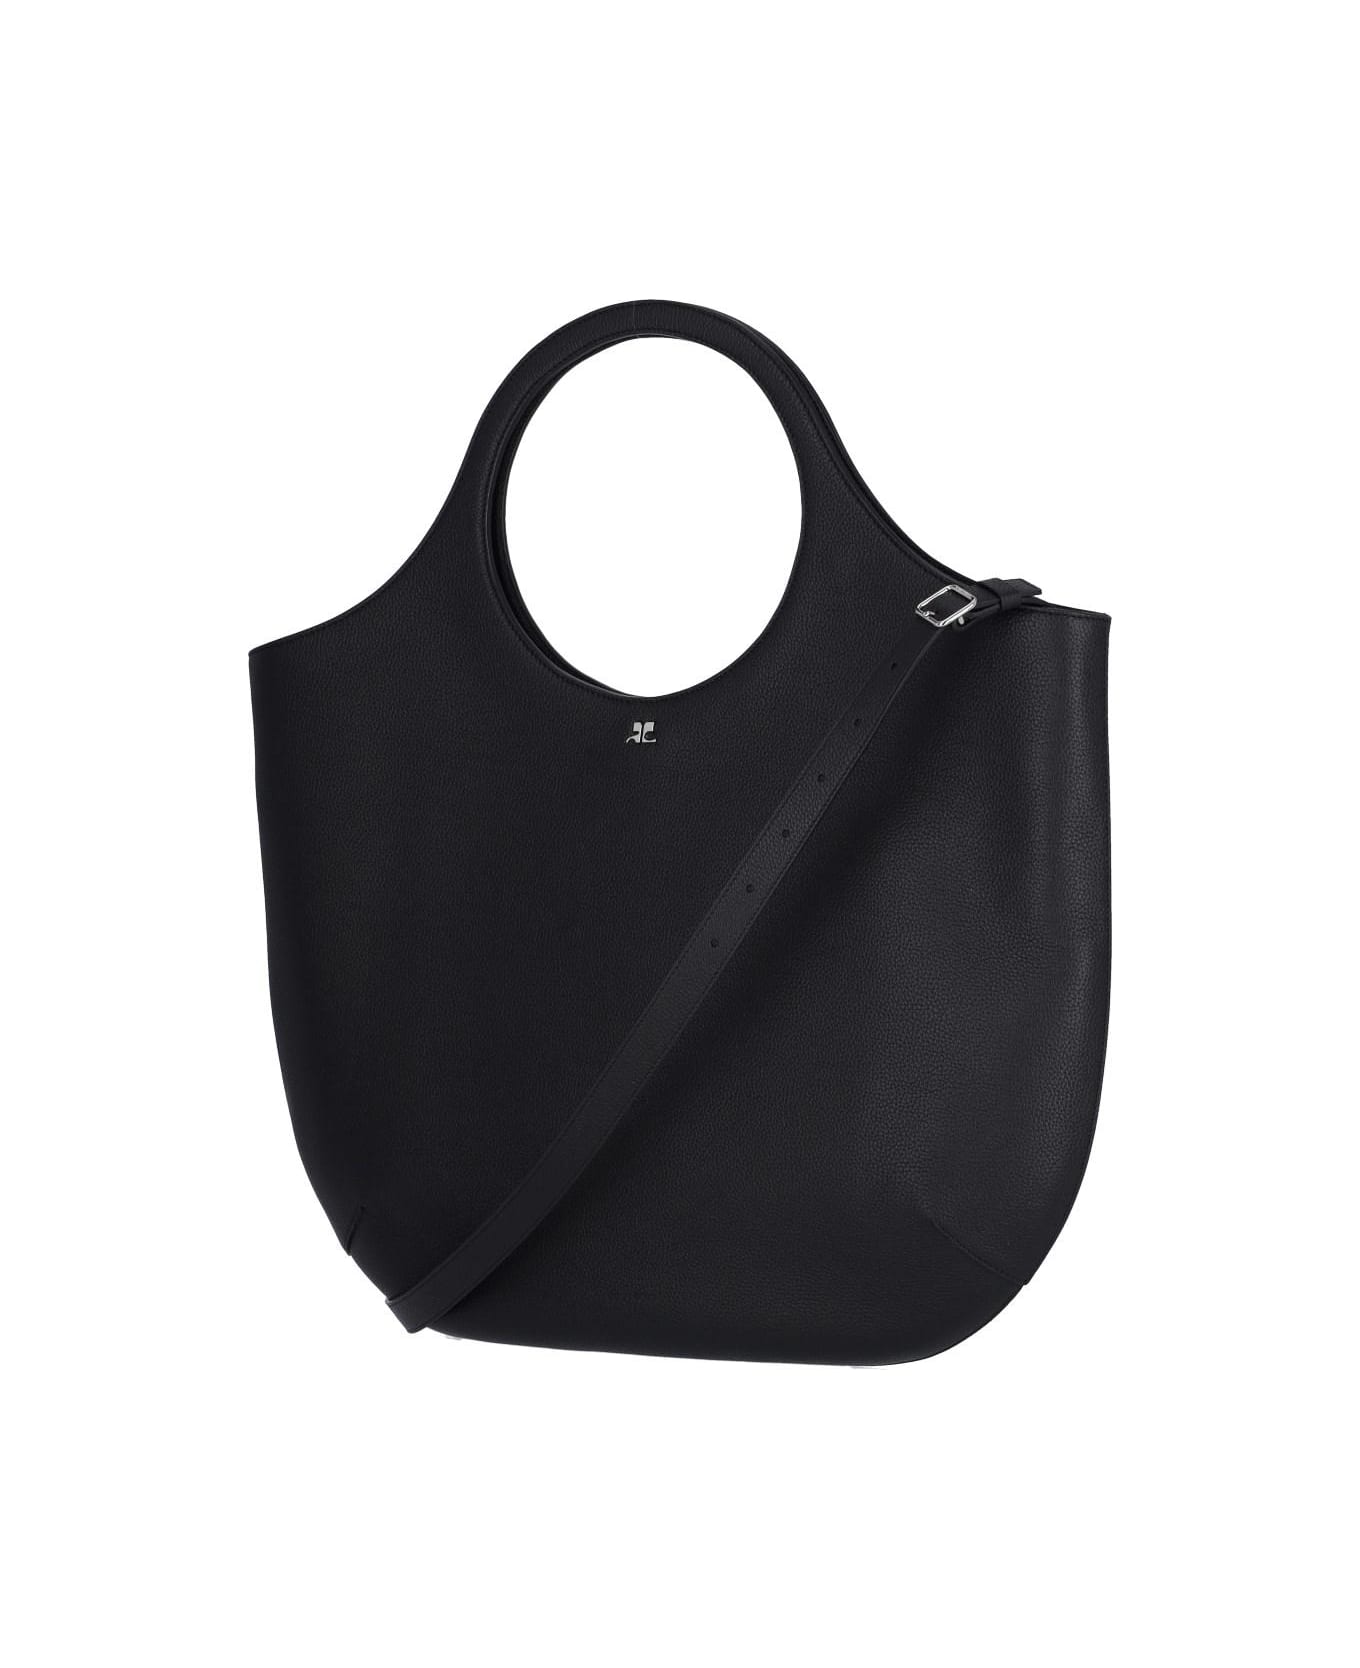 Courrèges 'holy' Handbag - Black